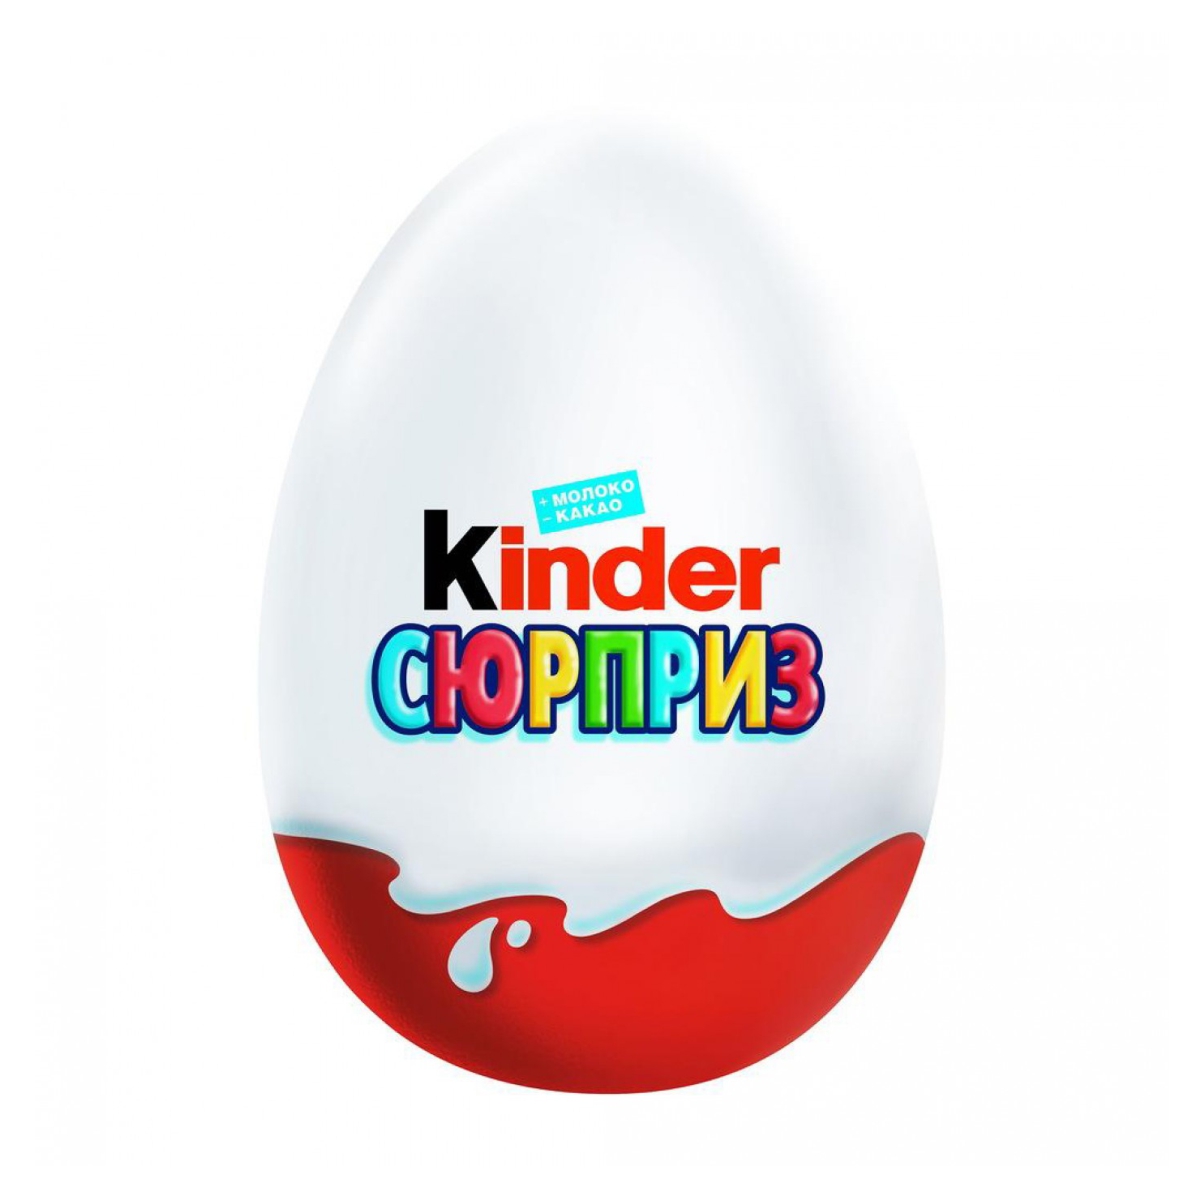 Яички киндер. Шоколадное яйцо kinder "Киндер-сюрприз", 20 г. Киндер сюрприз яйцо шлколад. Яйцо ШОК. Киндер сюрприз 20г.